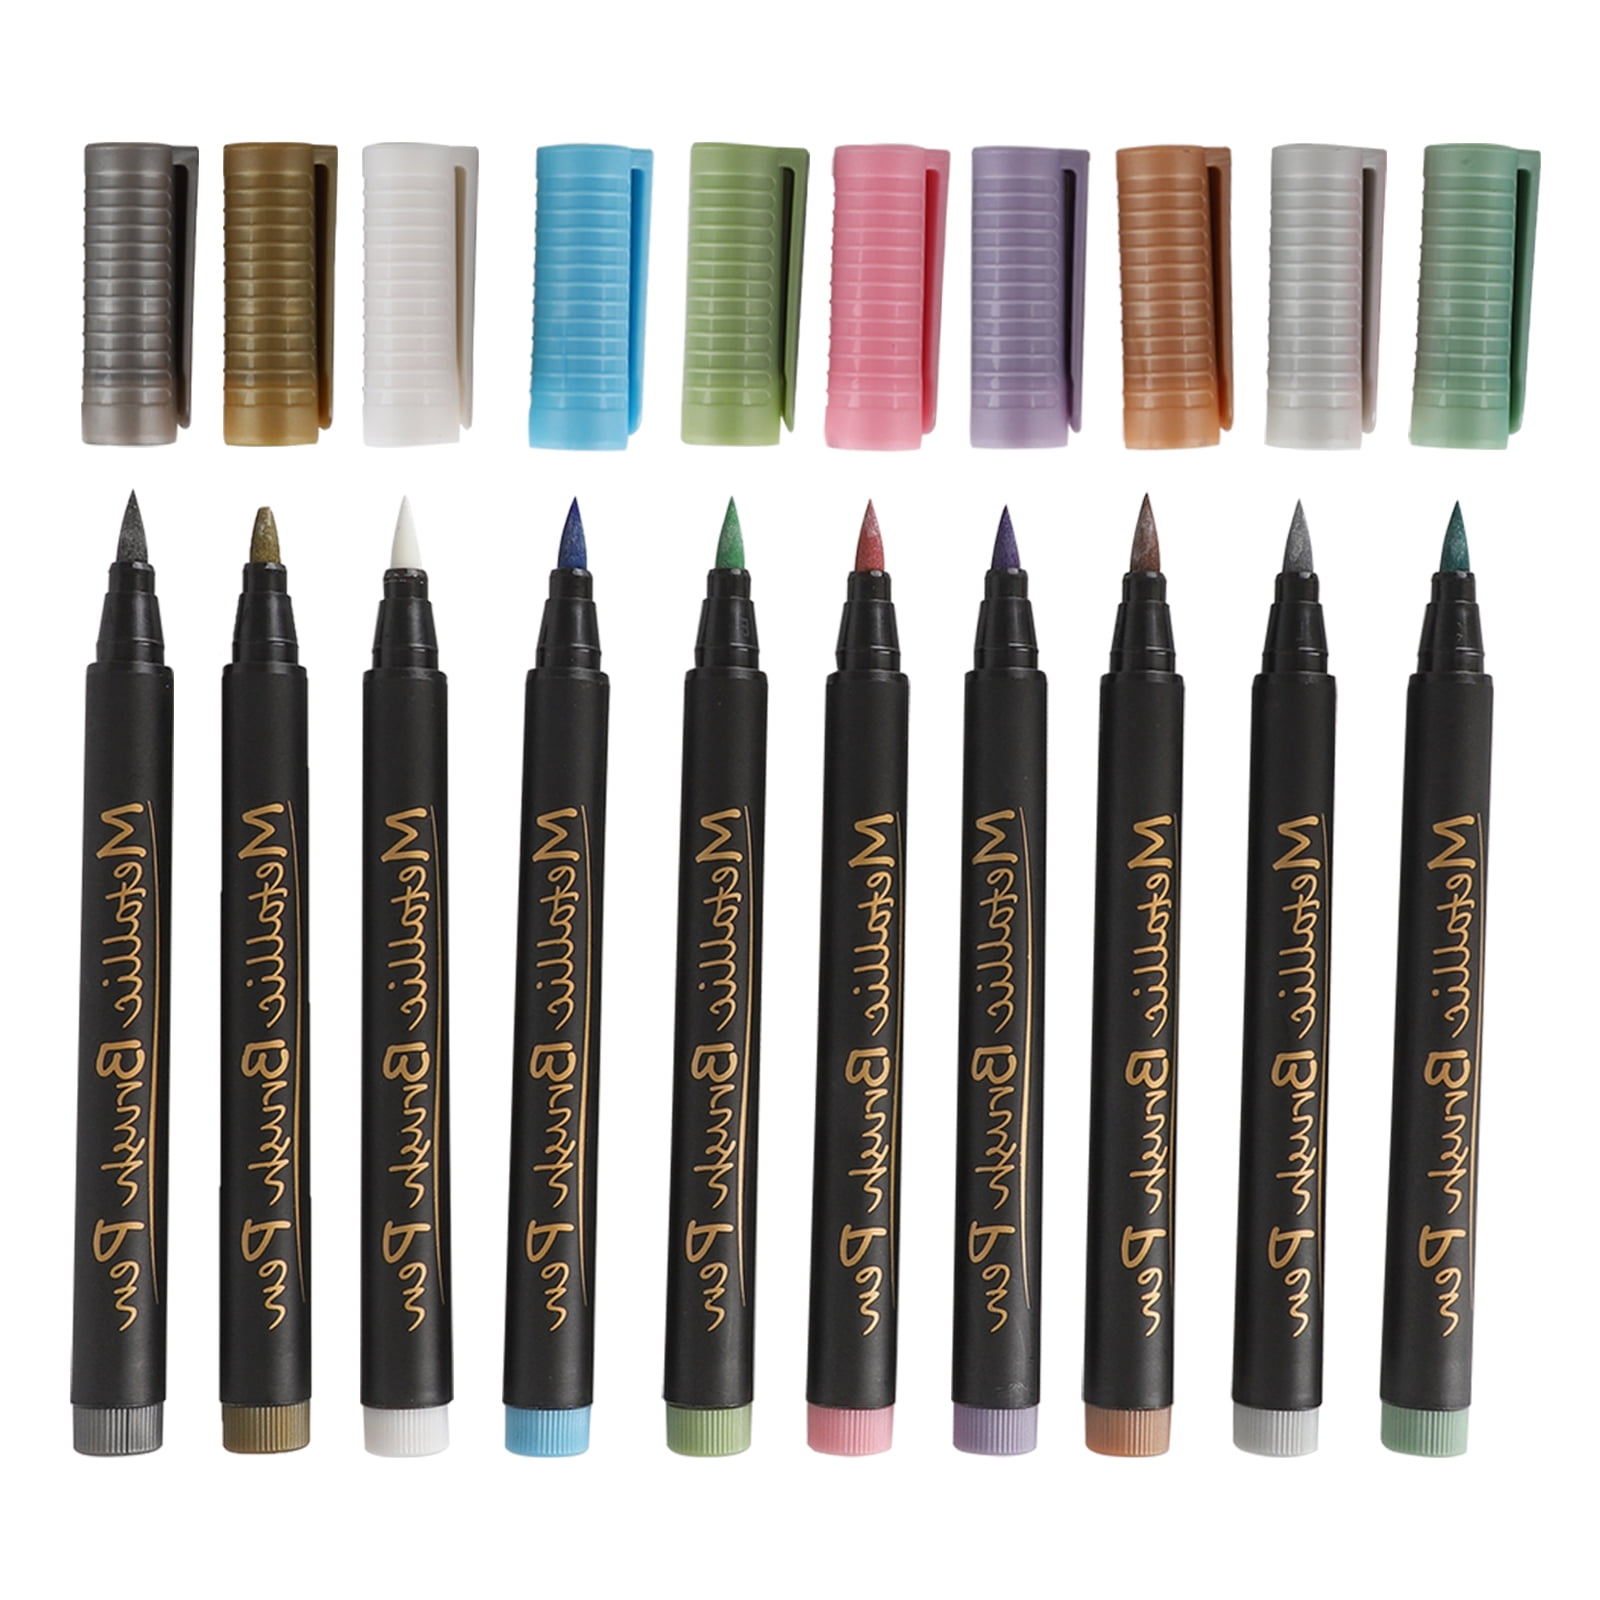 Penkacia Metallic Stifte Set 10 Farben - Wässriger Basis Marker